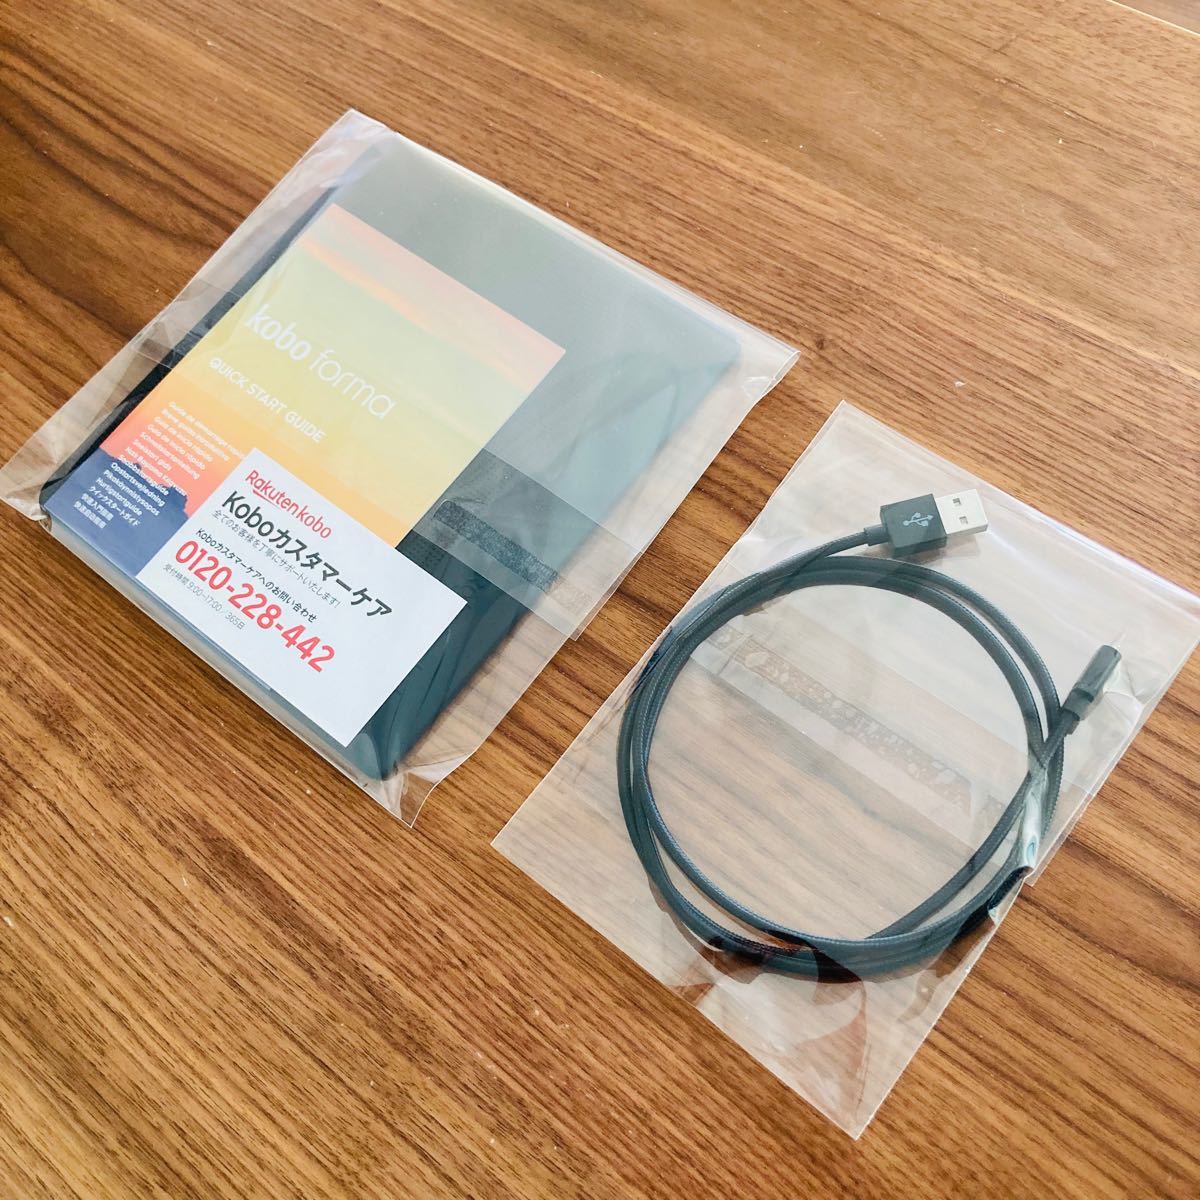 Kobo Forma 32GB 電子書籍リーダー ブラック　N782-SJ-BK-S-EP 8インチ　内臓メモリ:32GB